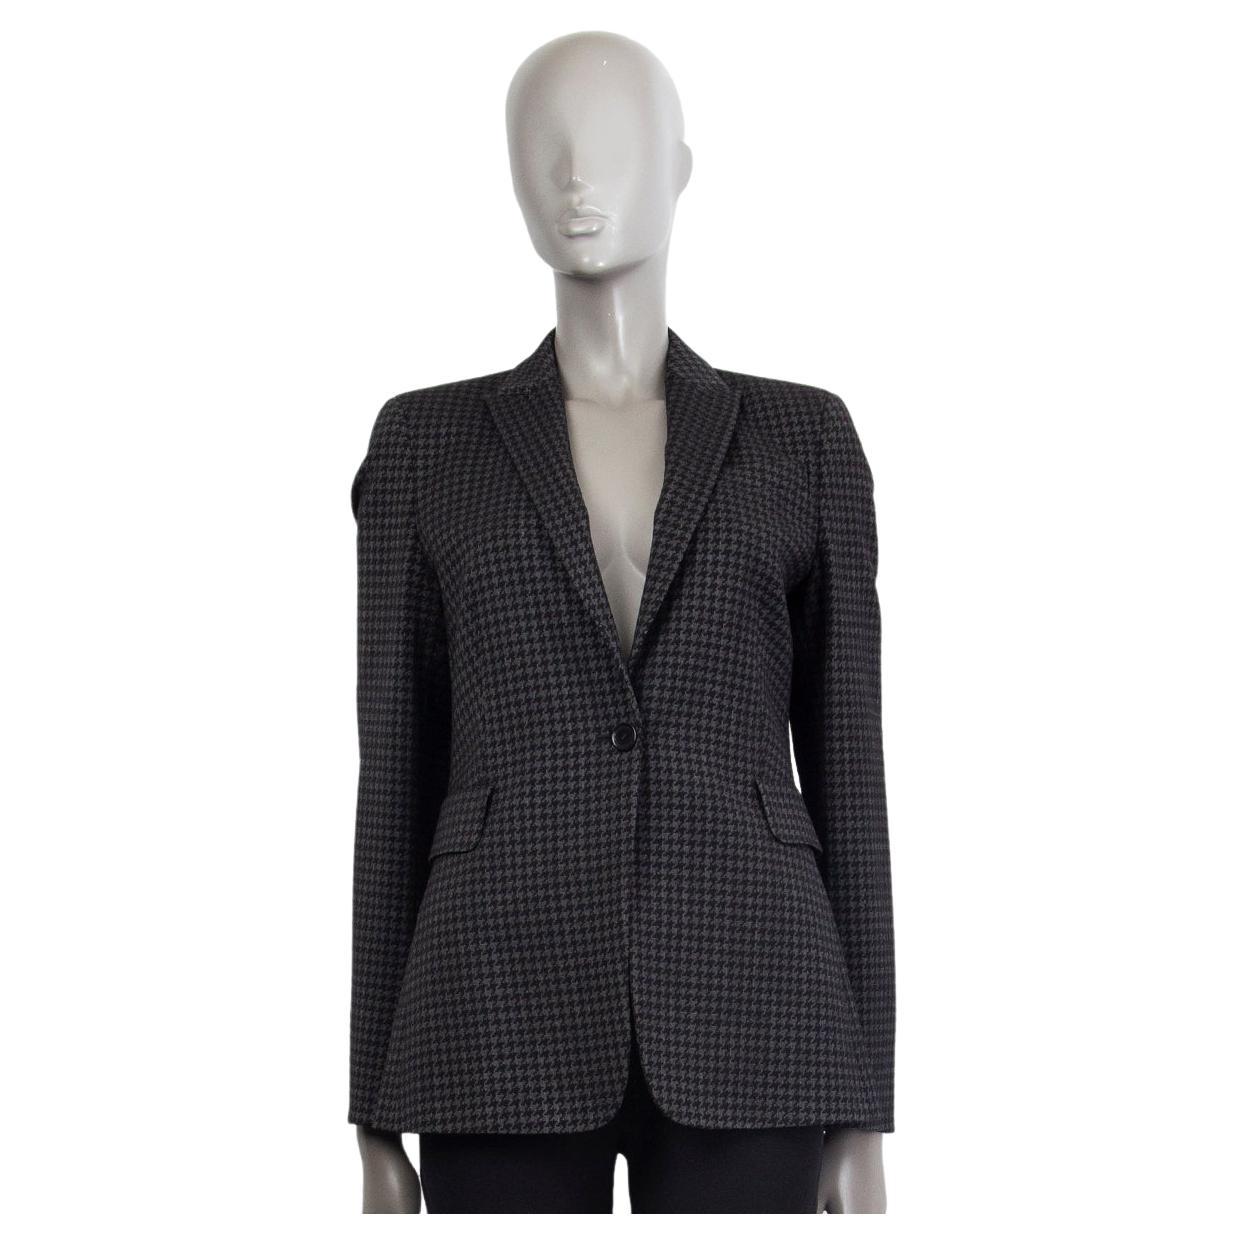 AKRIS PUNTO grey & black wool blend HOUNDSTOOTH Blazer Jacket 36 S